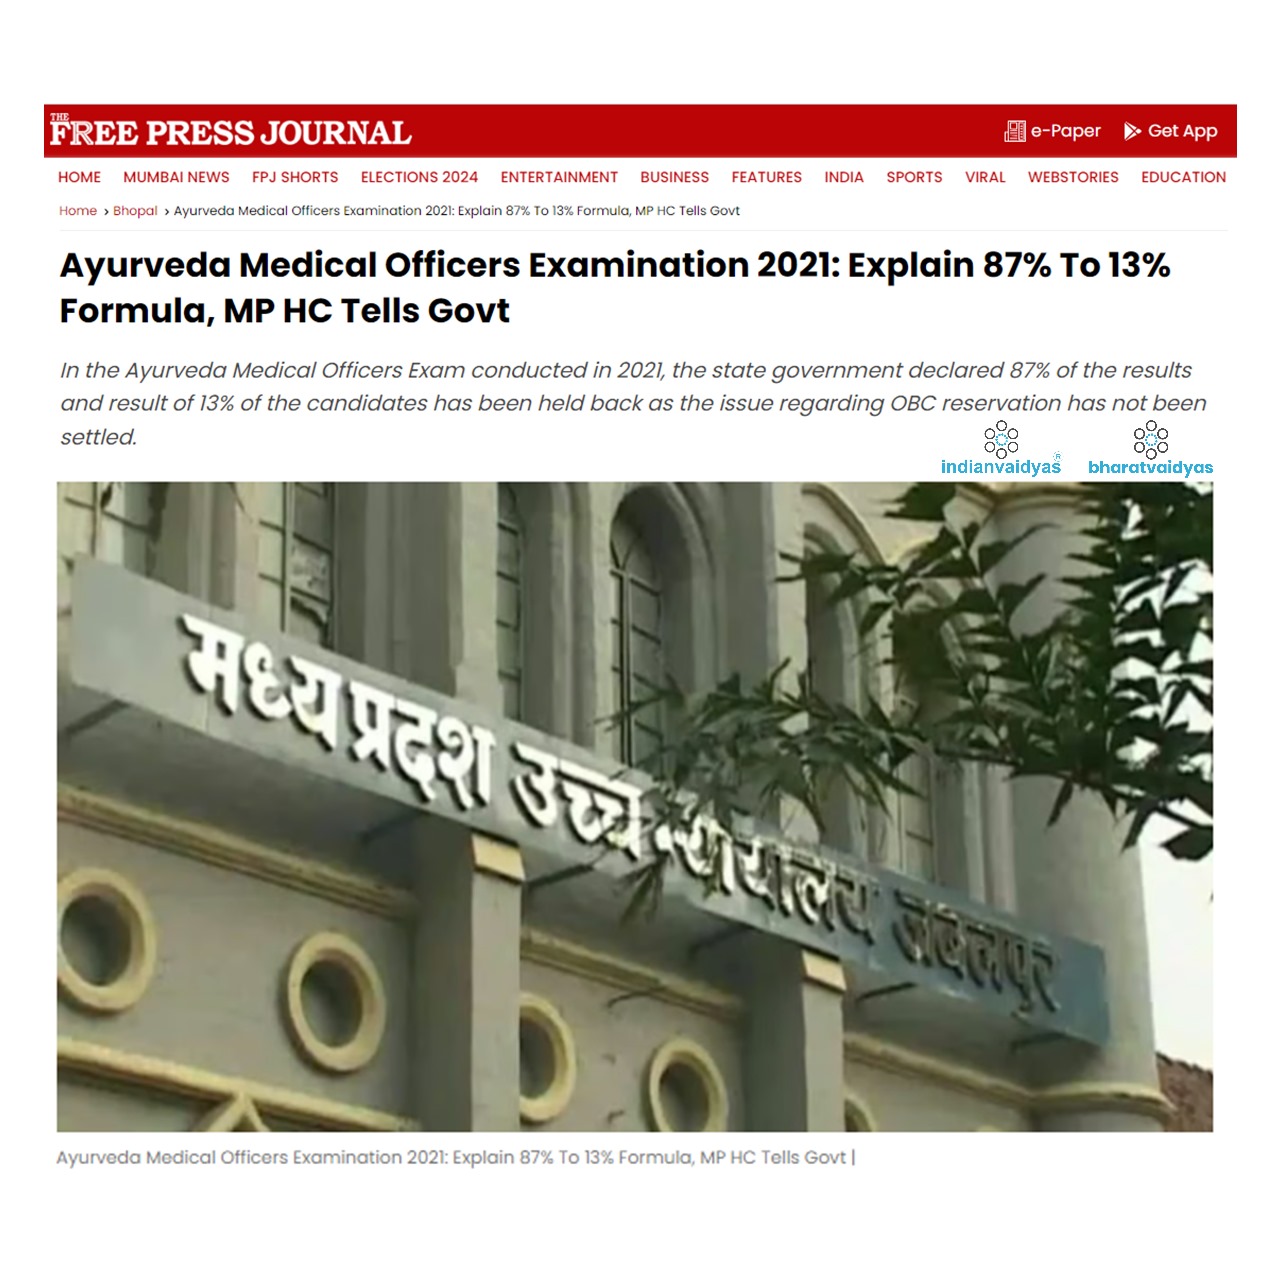 Ayurveda Medical Officers Examination 2021: Explain 87% To 13% Formula, MP HC Tells Govt